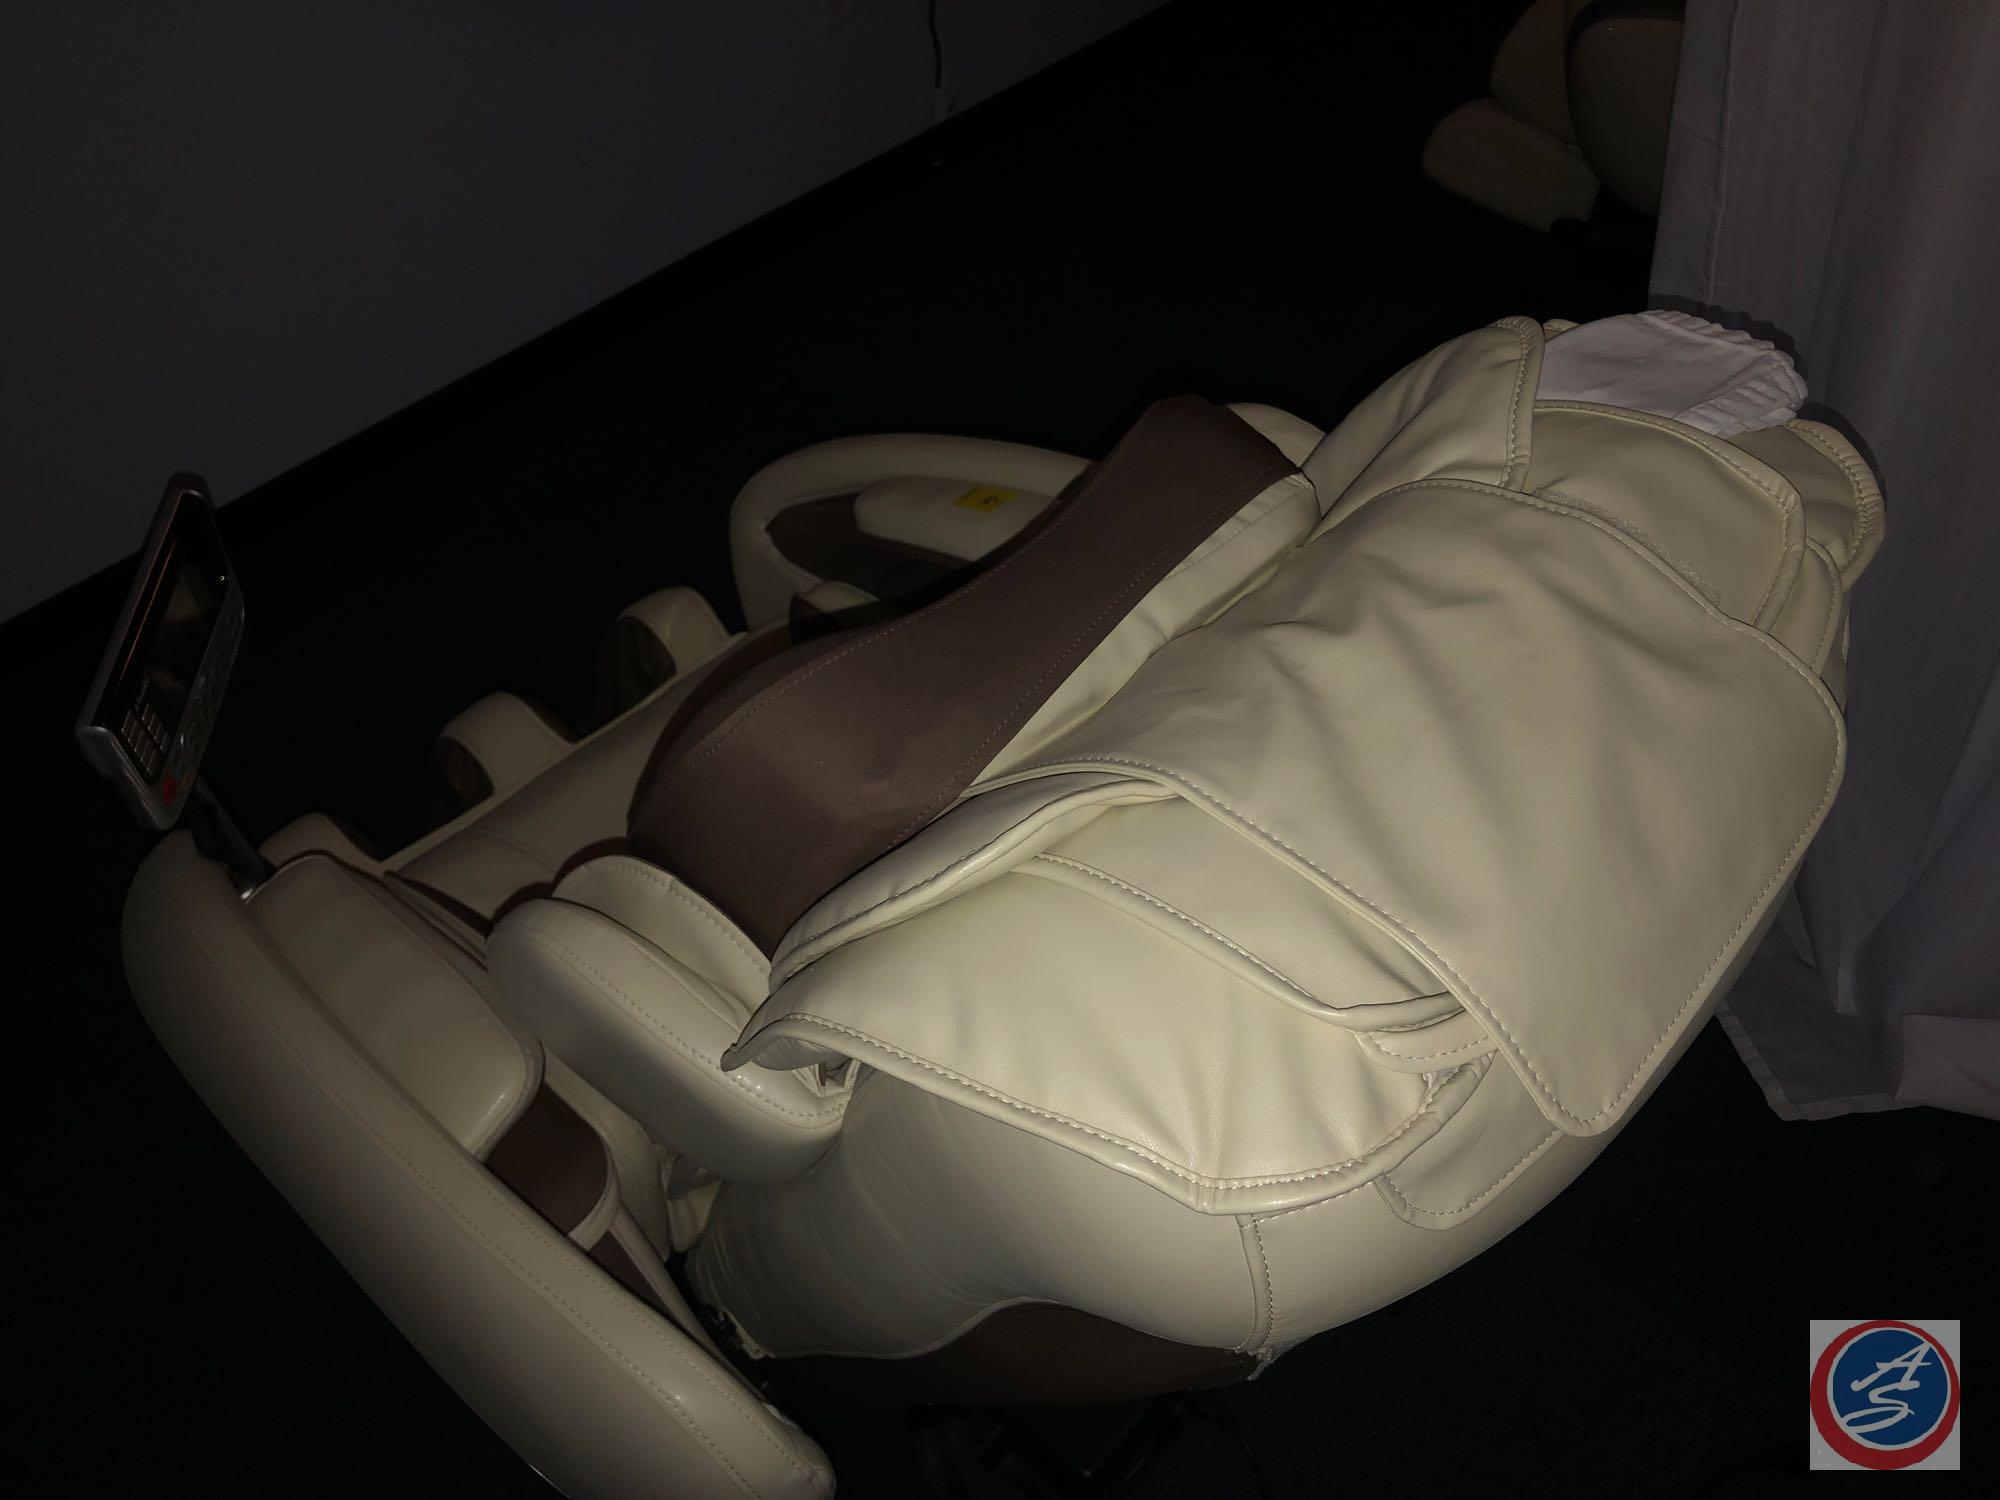 Osaki Massage Recliner Model No. OS4000